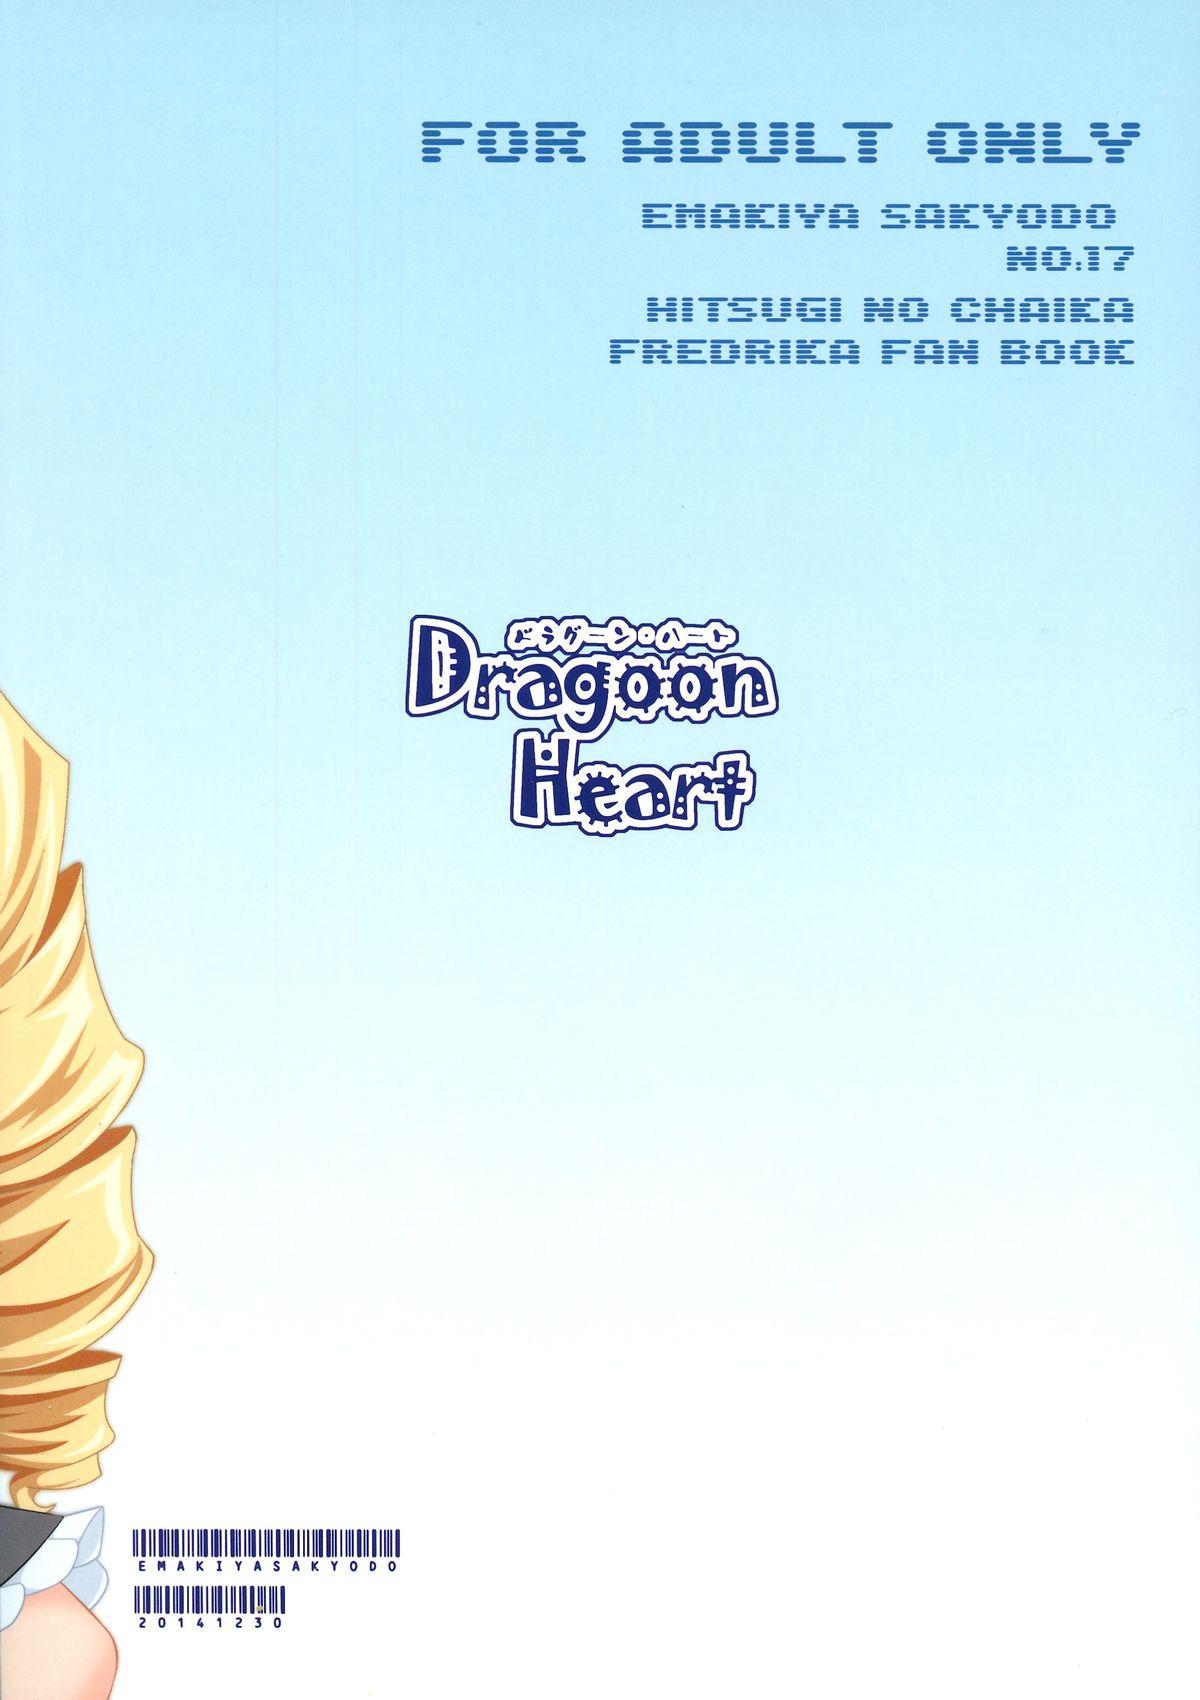 Gang Dragoon Heart - Hitsugi no chaika Milf Porn - Page 2